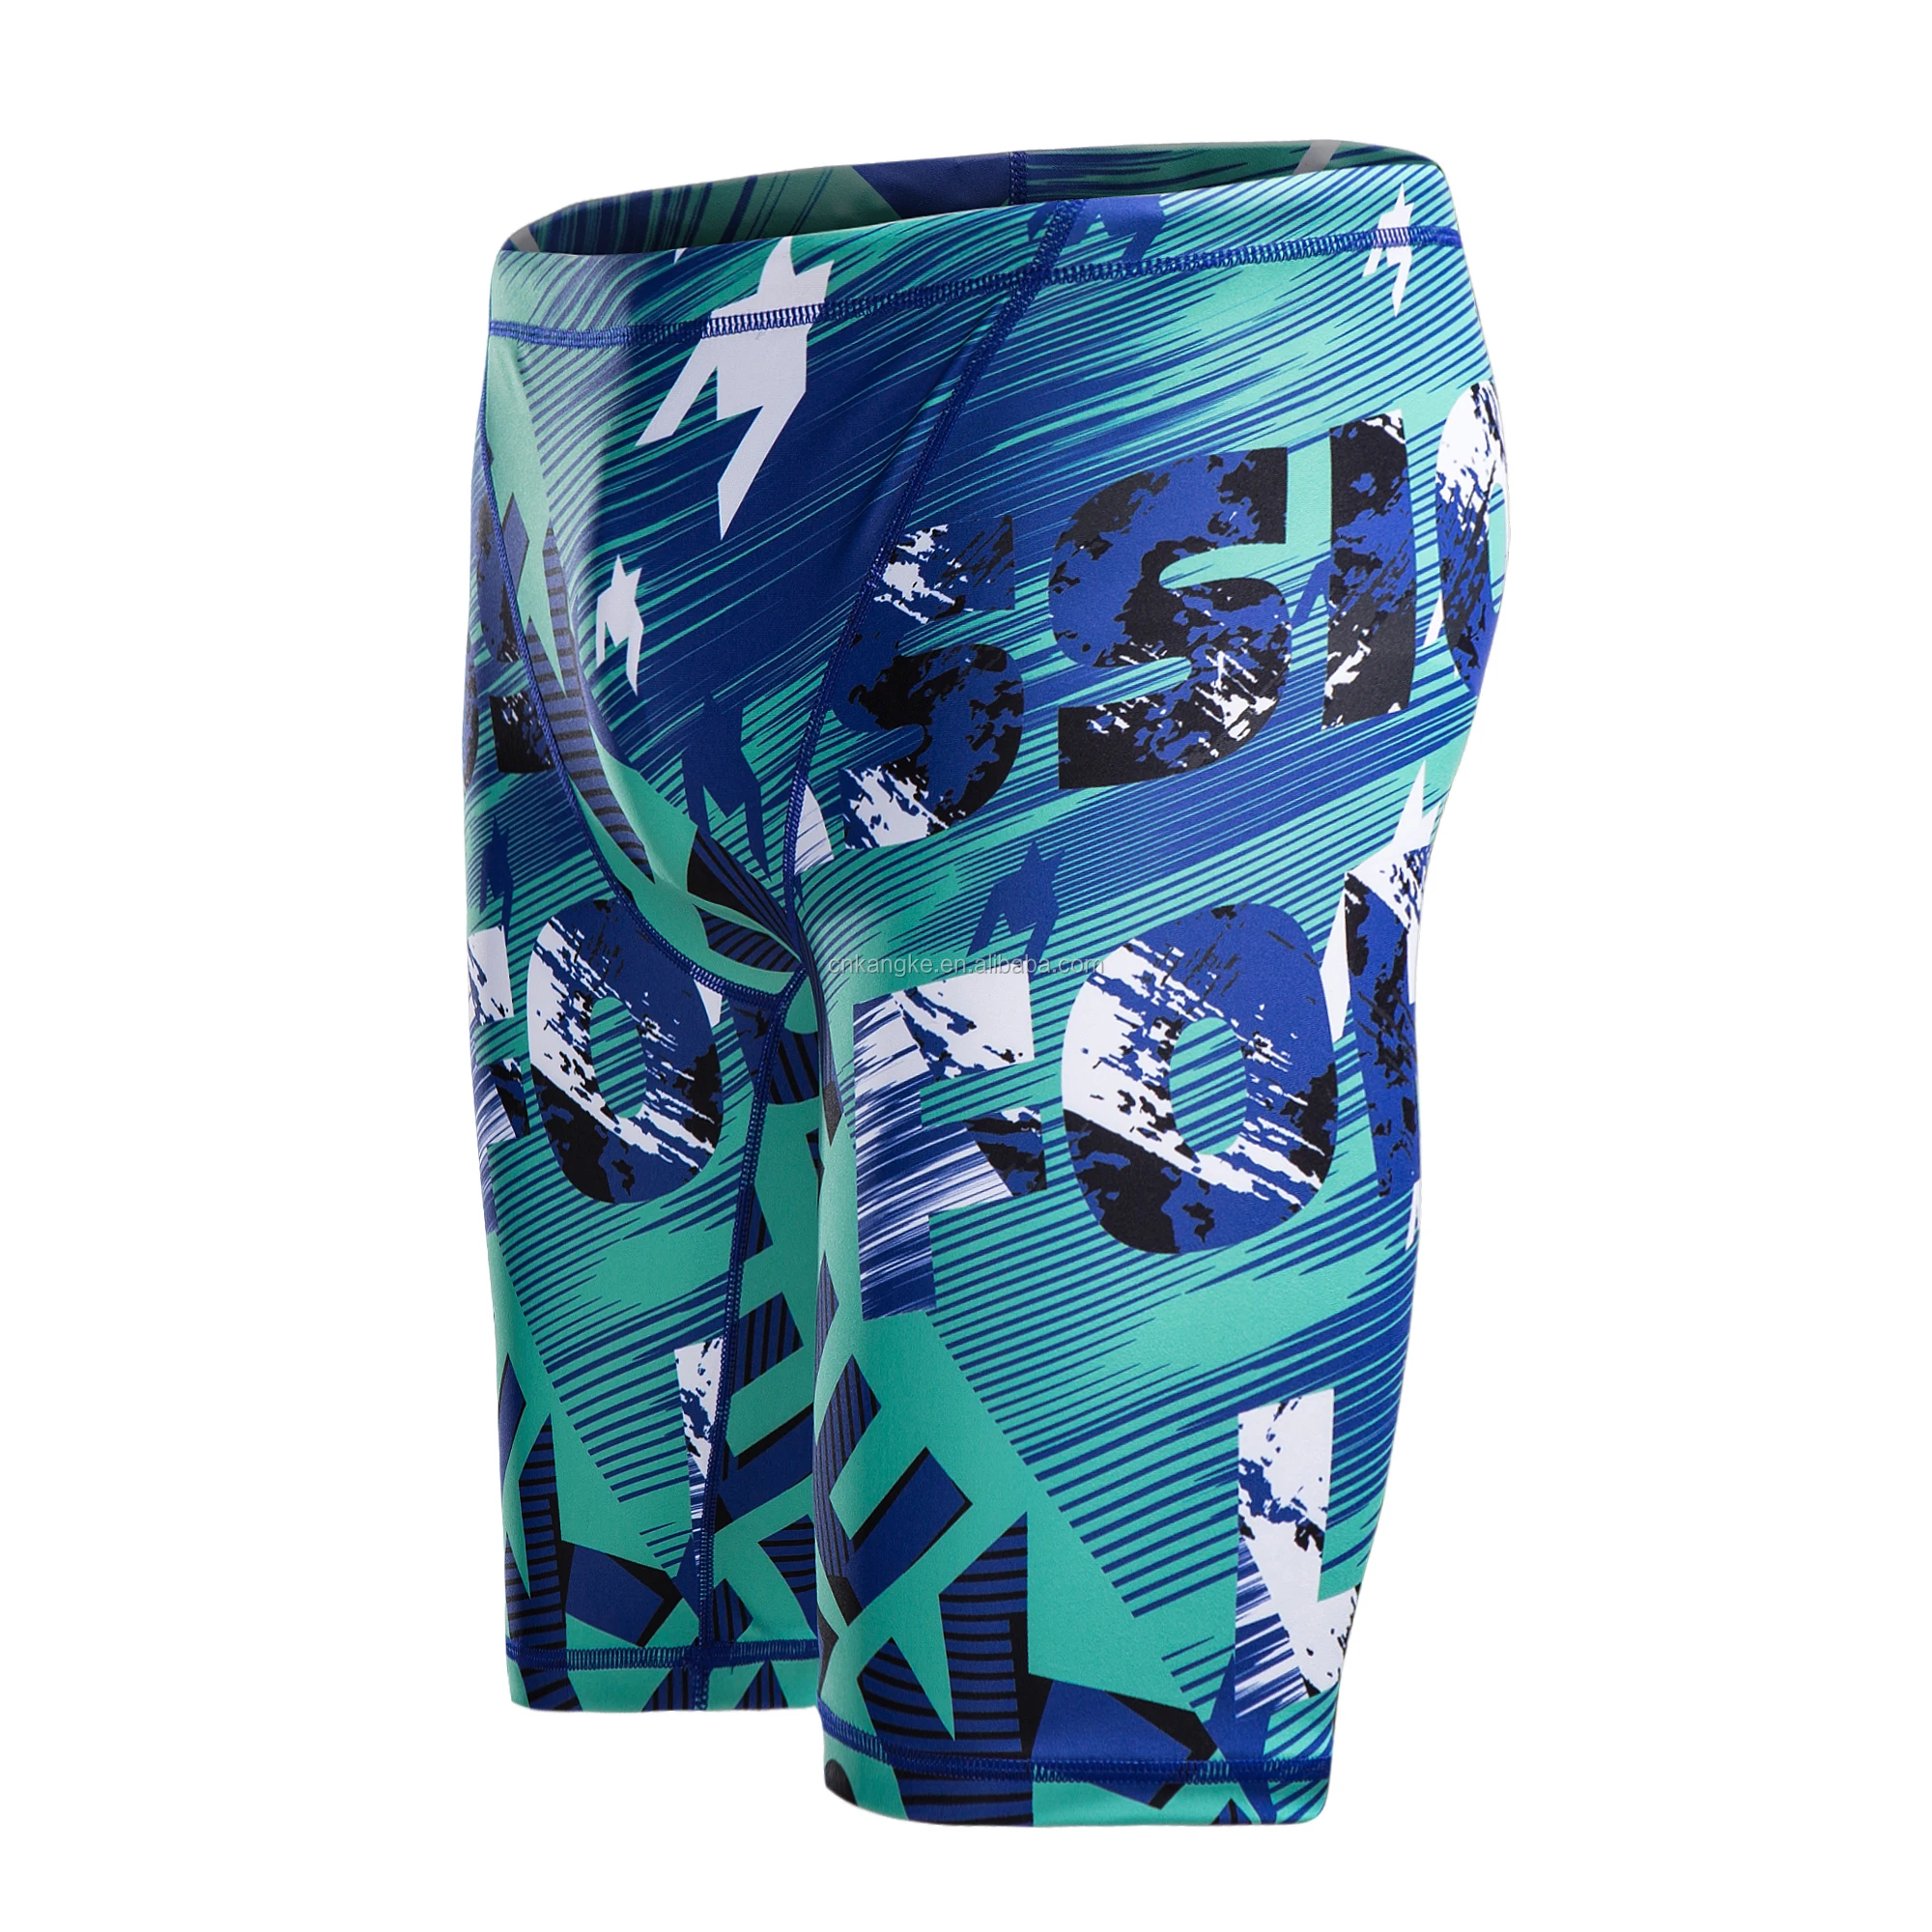 KGKE Men/'s Swim Jammers Compression Fashion Print Jammer Swimsuit Swim Boxer Long